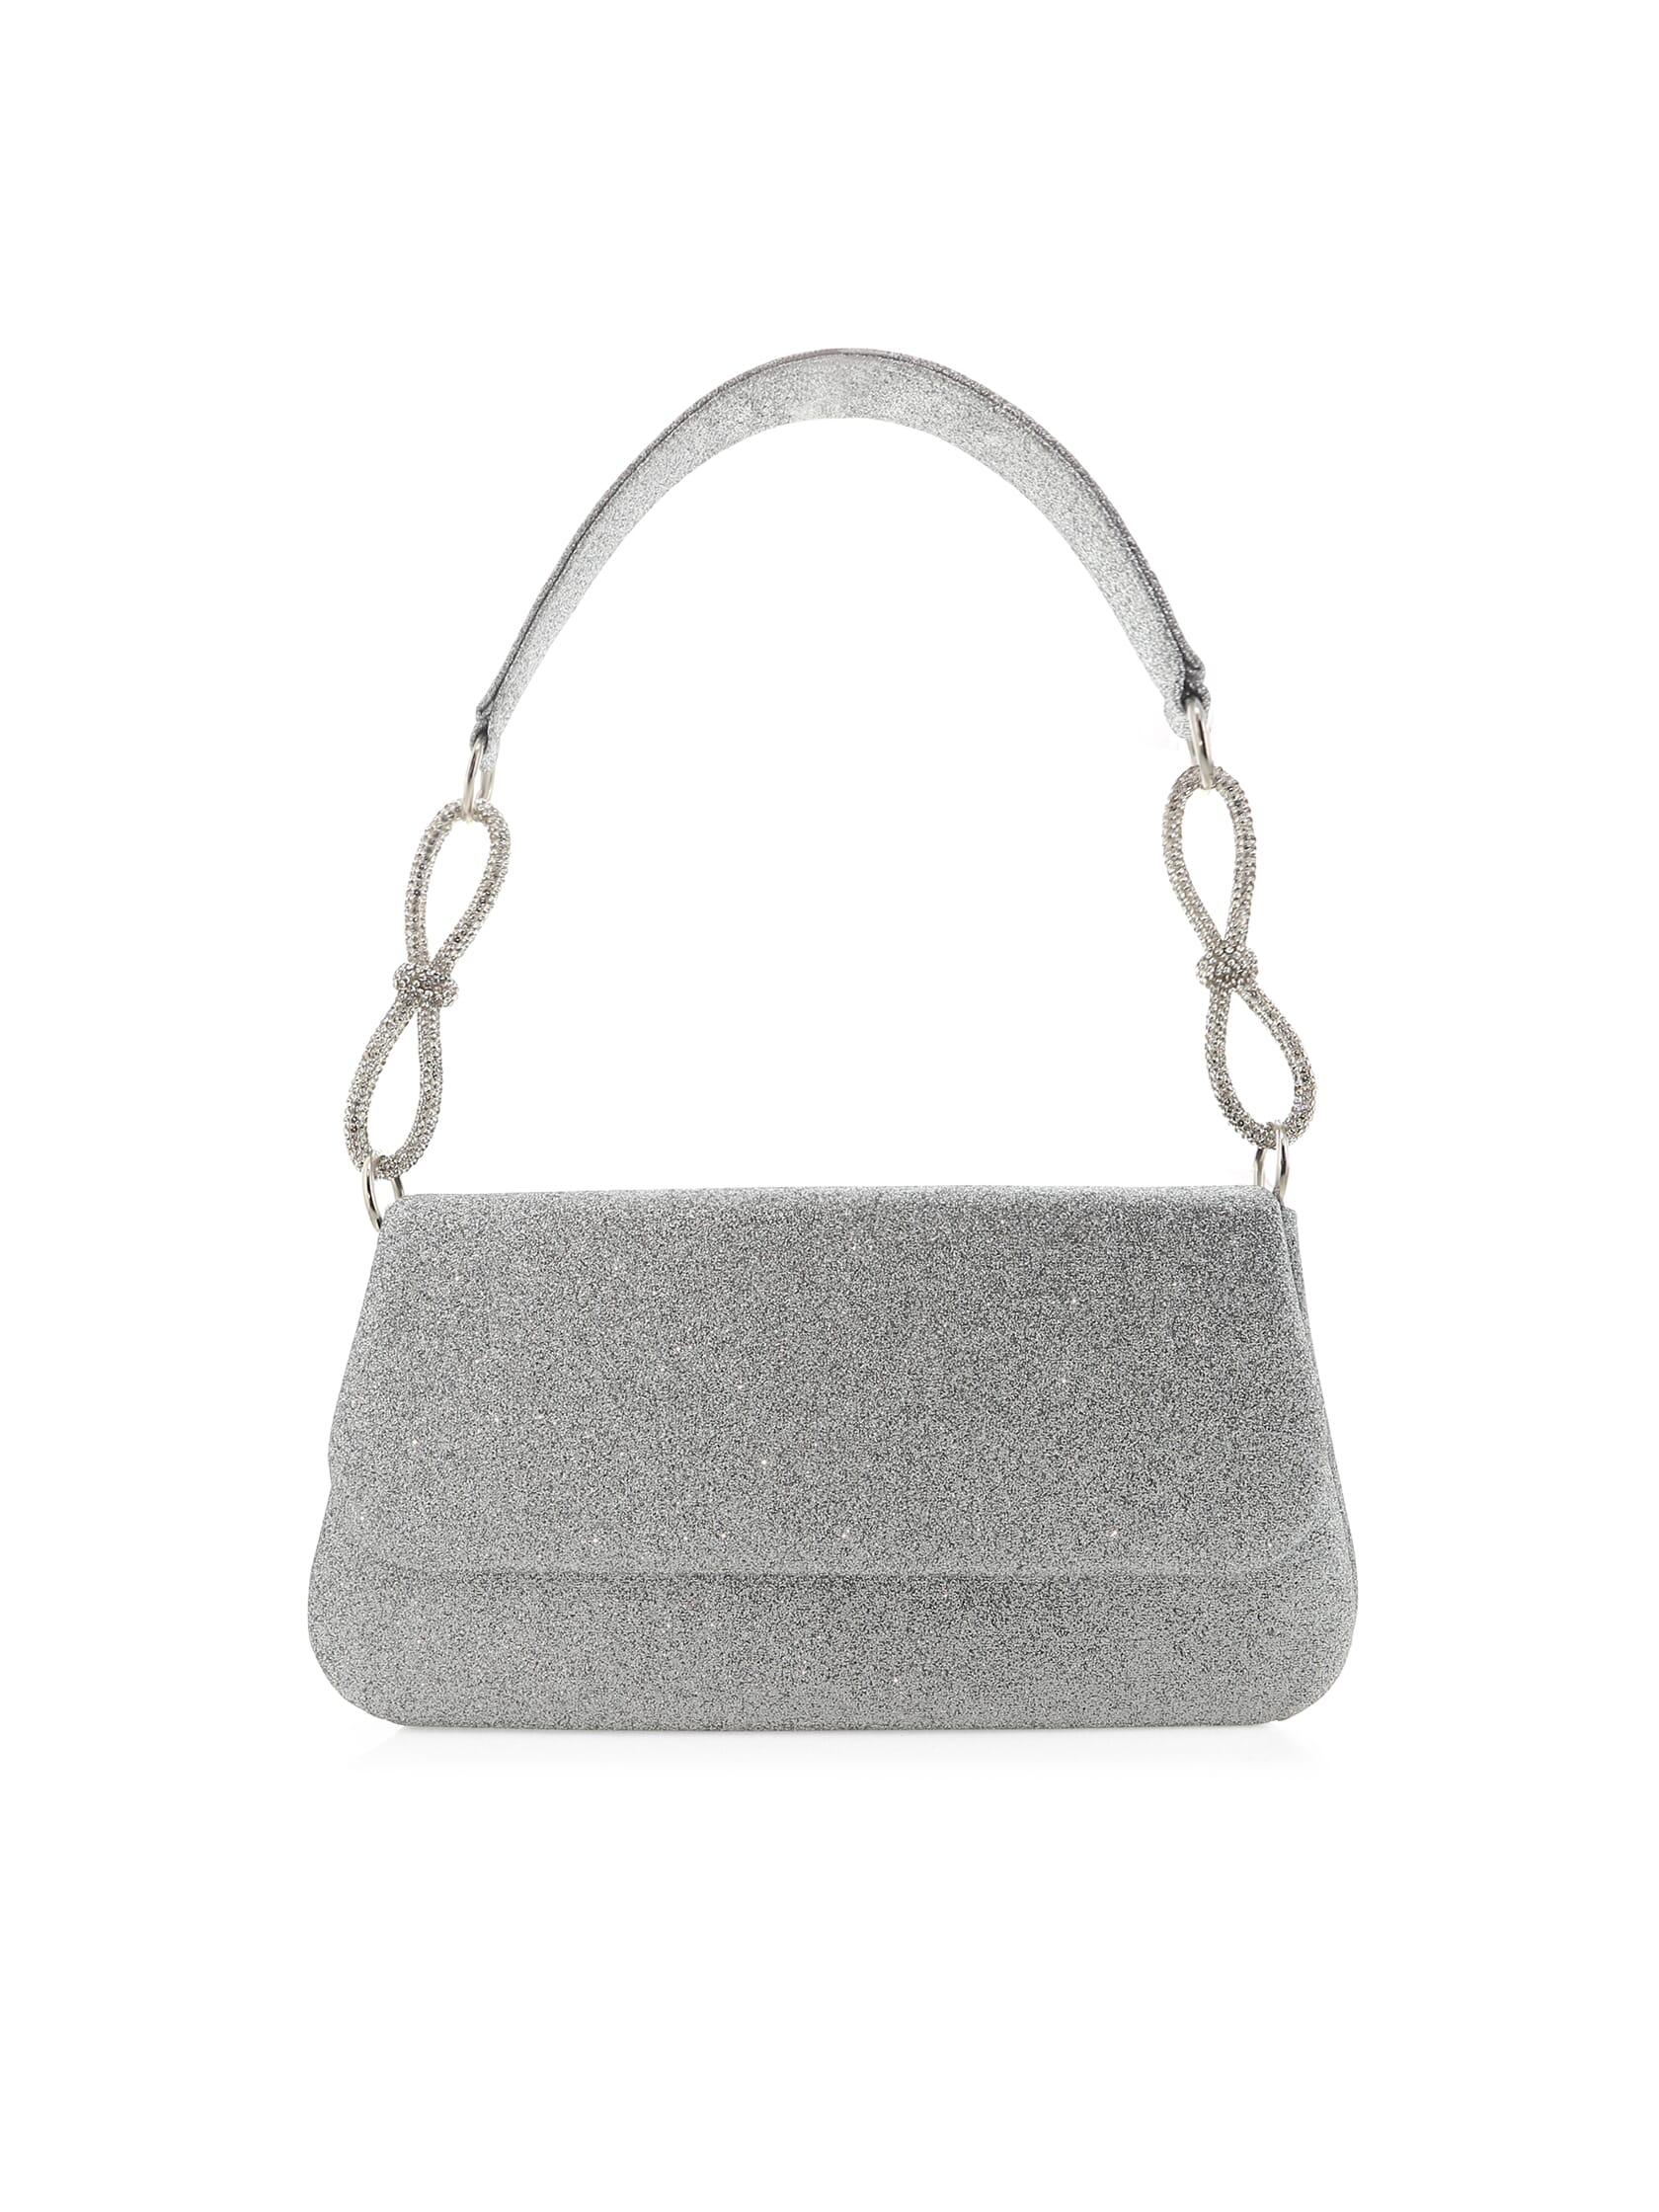 BILLINI | Isla Shoulder Bag in Silver Glitter| FashionPass